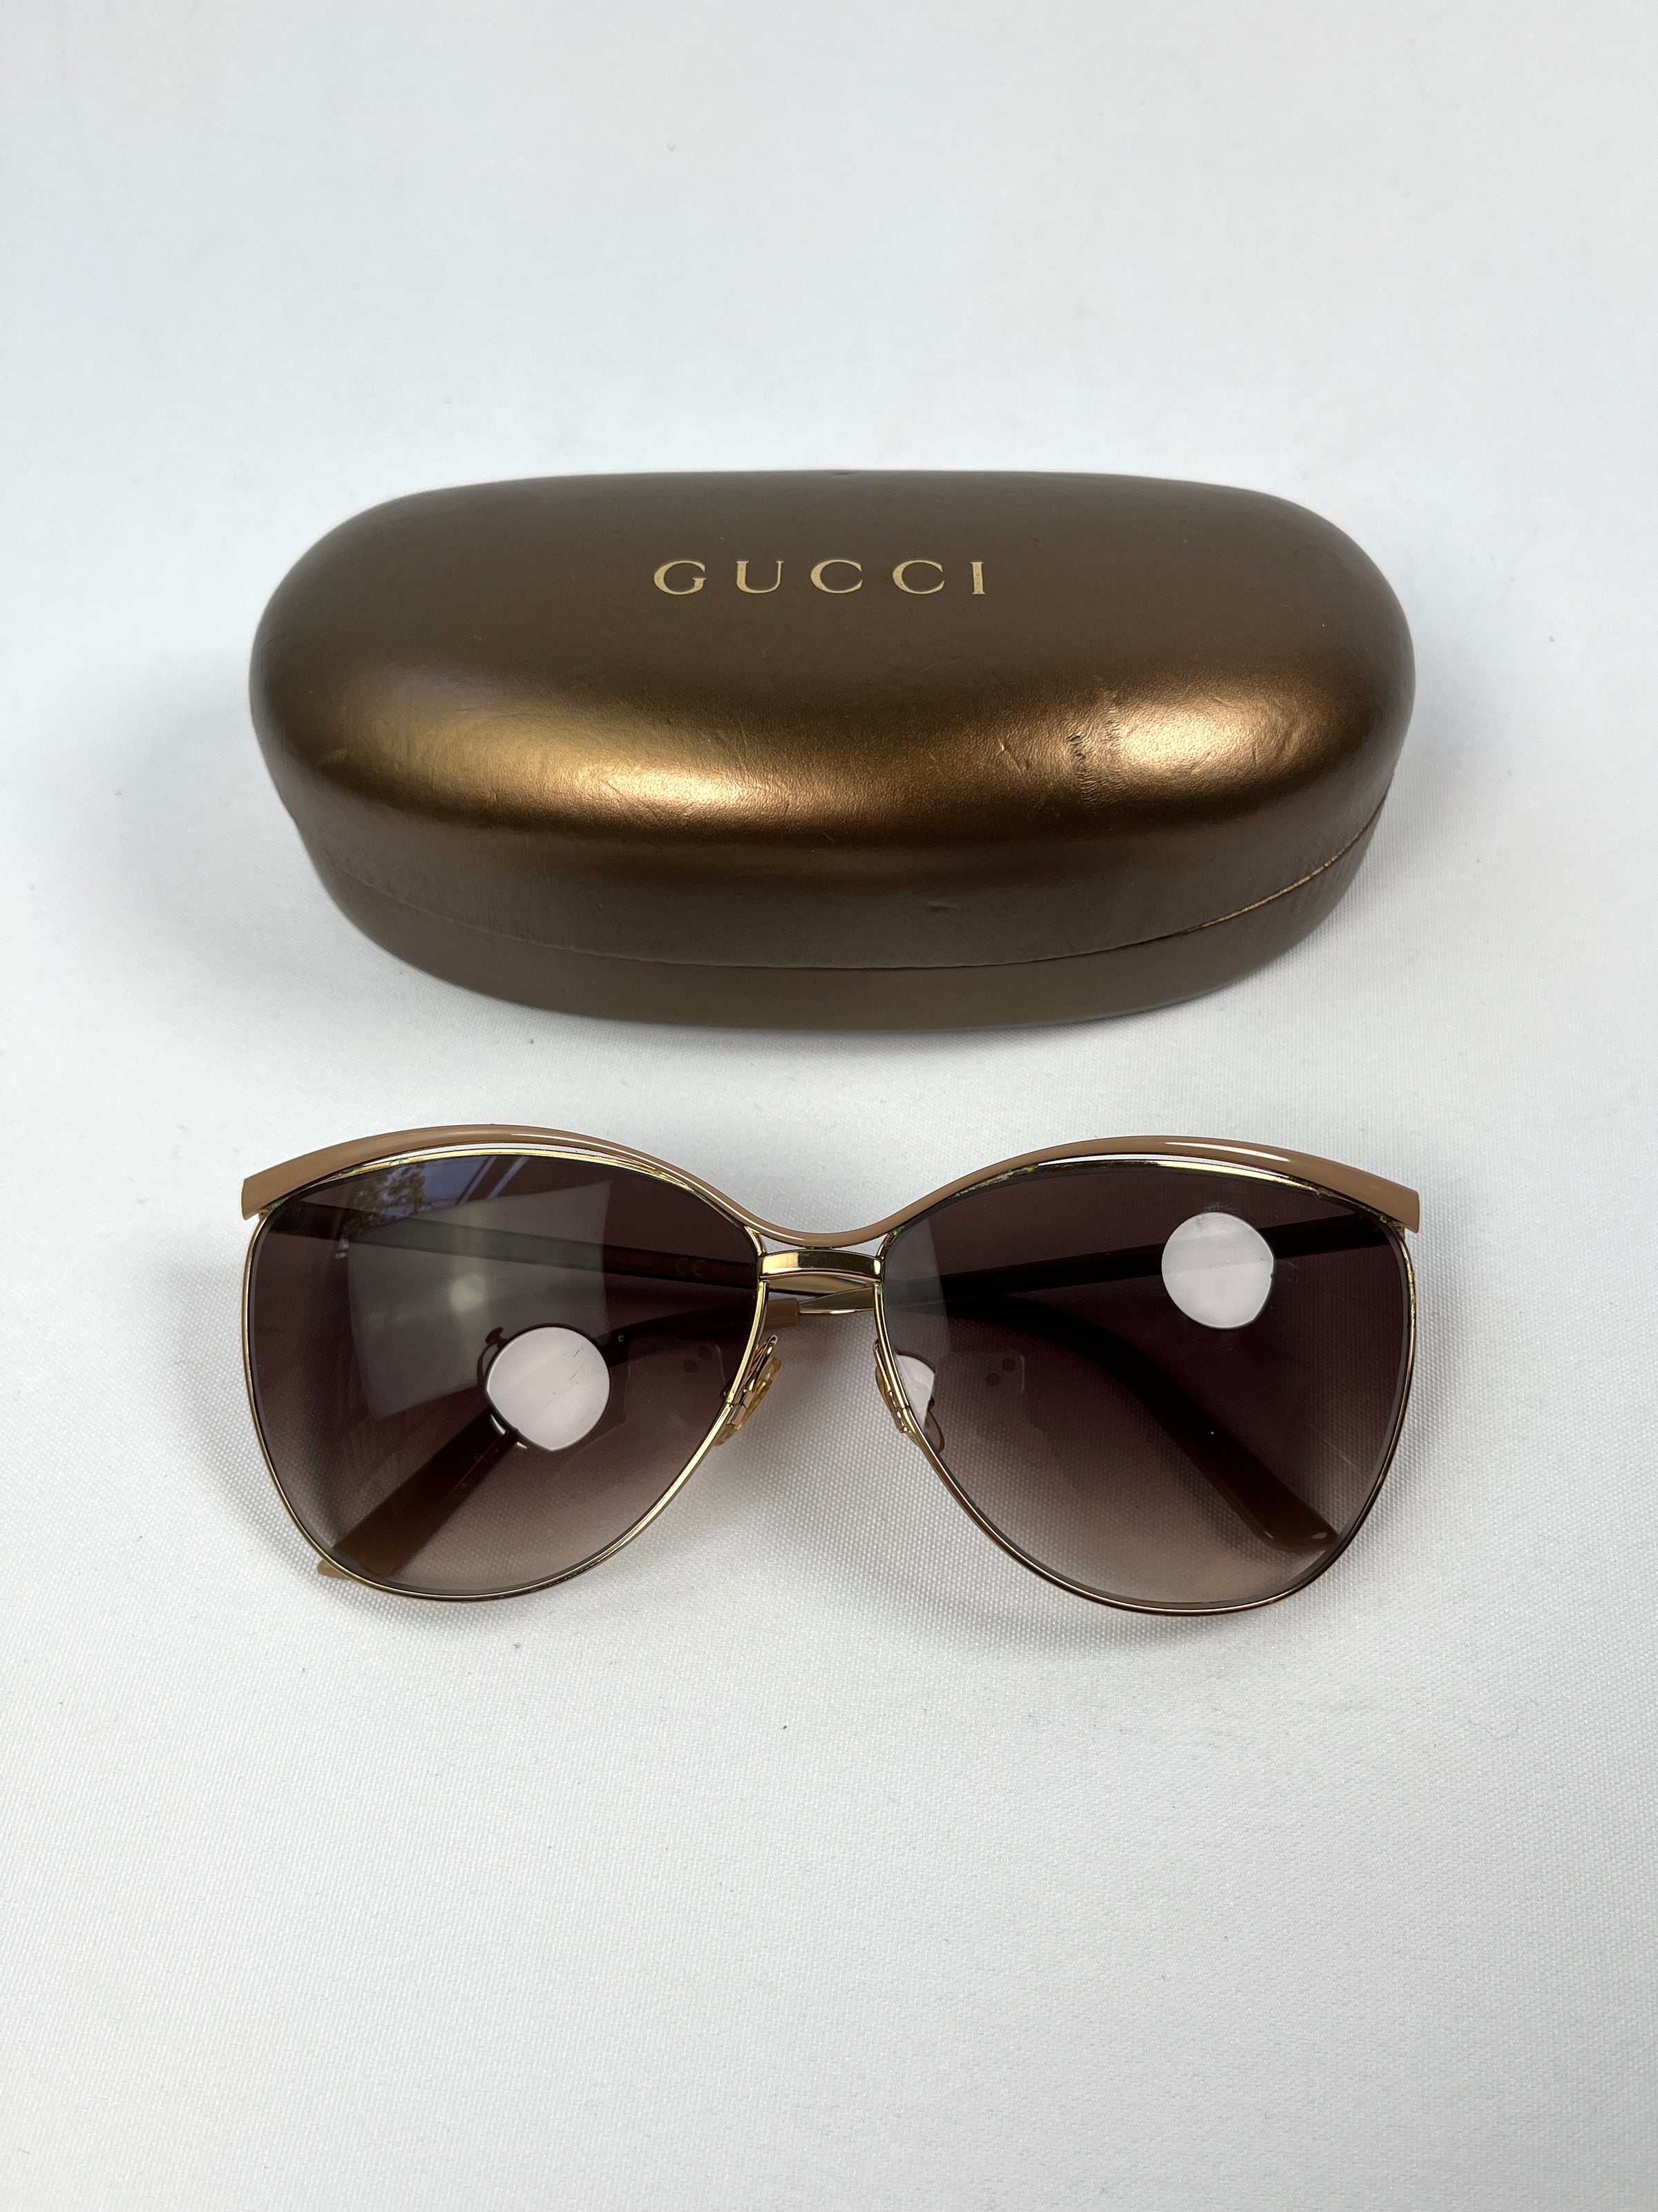 Gucci Metal & Acetate Gradient Aviator Sunglasses, Gold/Black, Women's